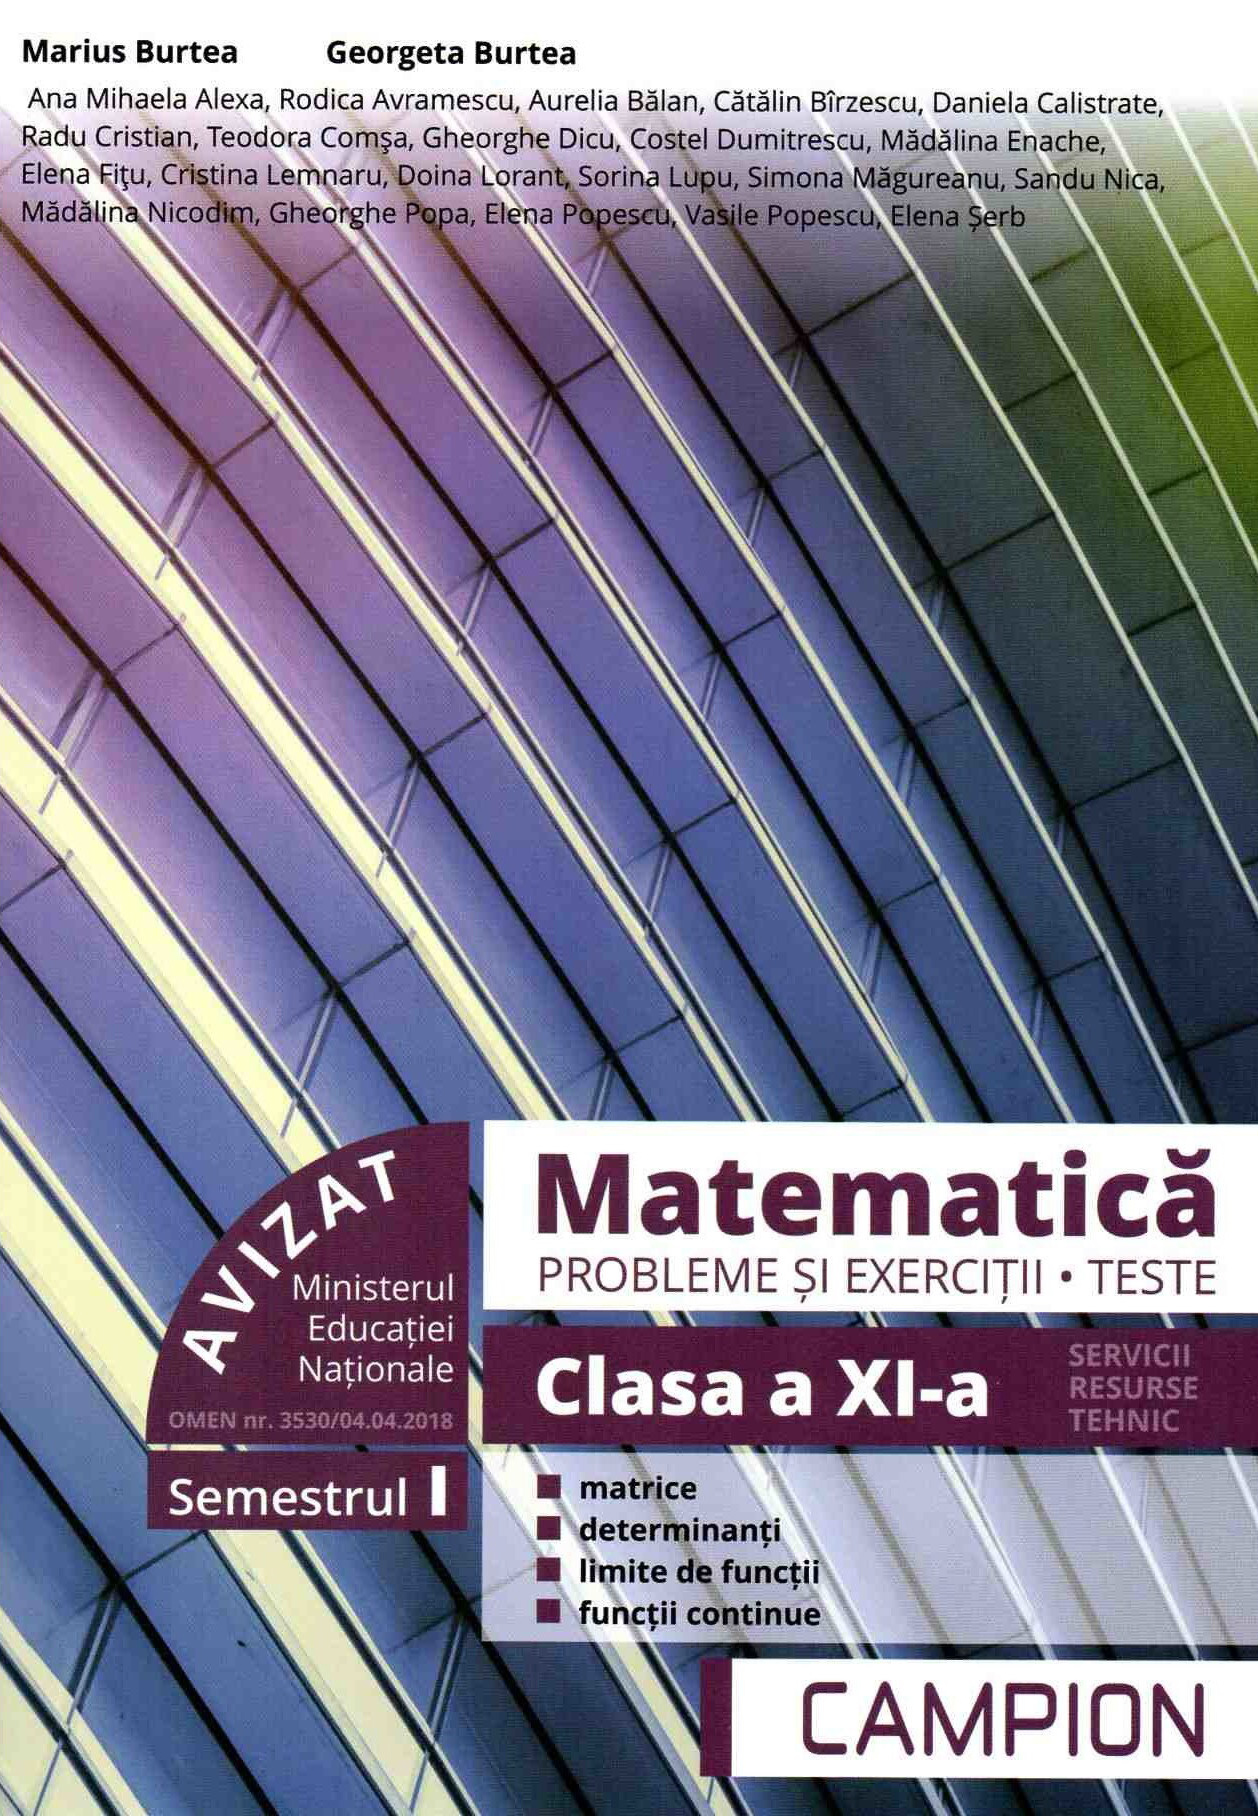 Matematica - Probleme si exercitii, teste - Clasa a XI-a, Semestrul I